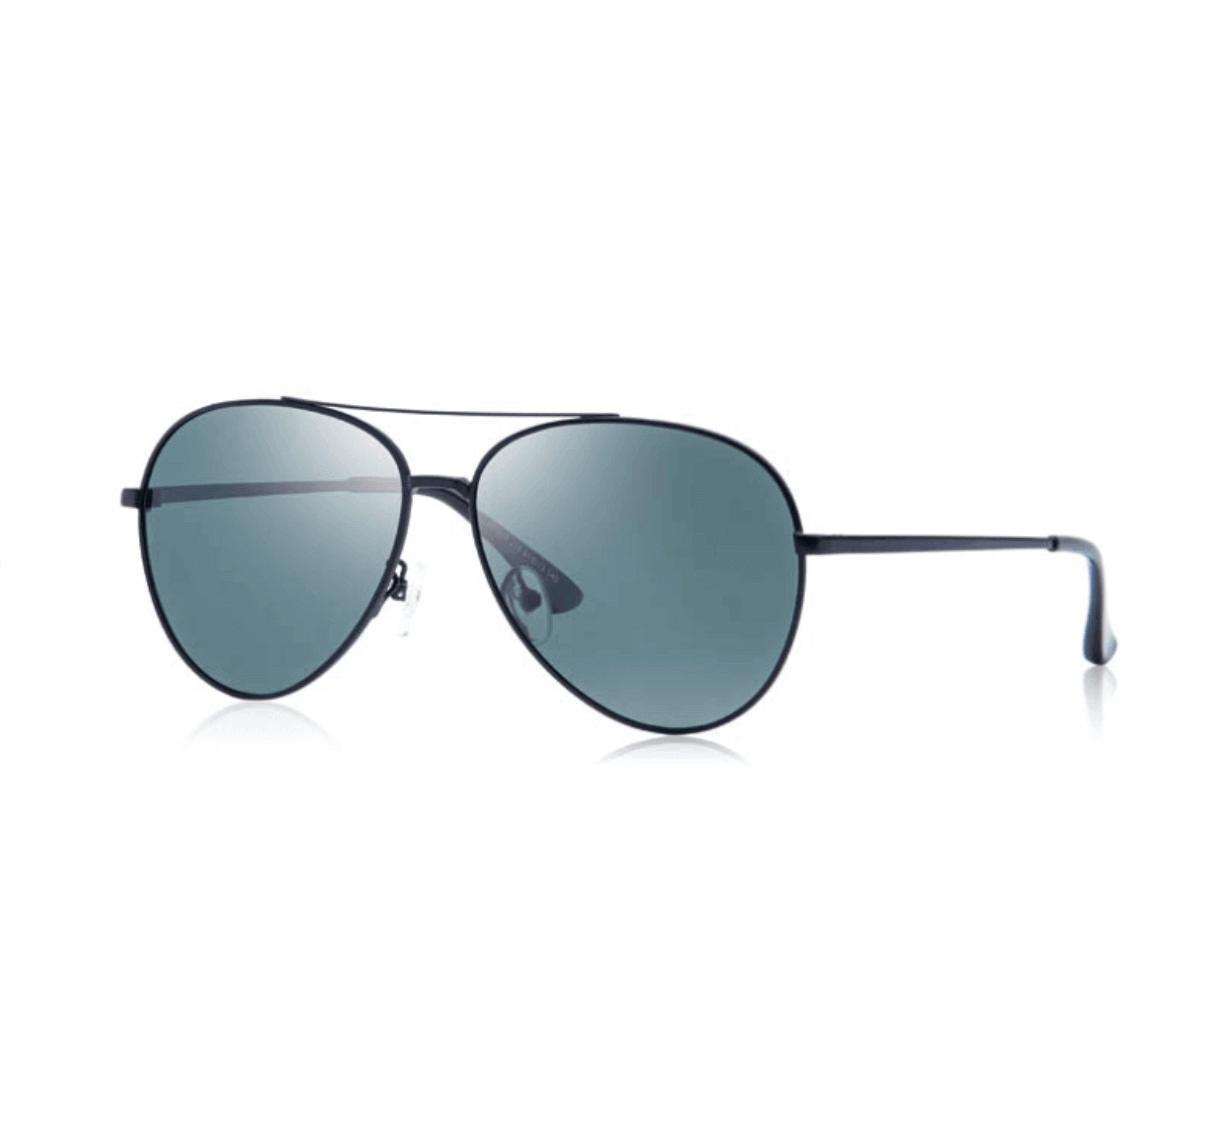 Aviator Sunglasses Wholesale from China Sunglasses Manufacturer